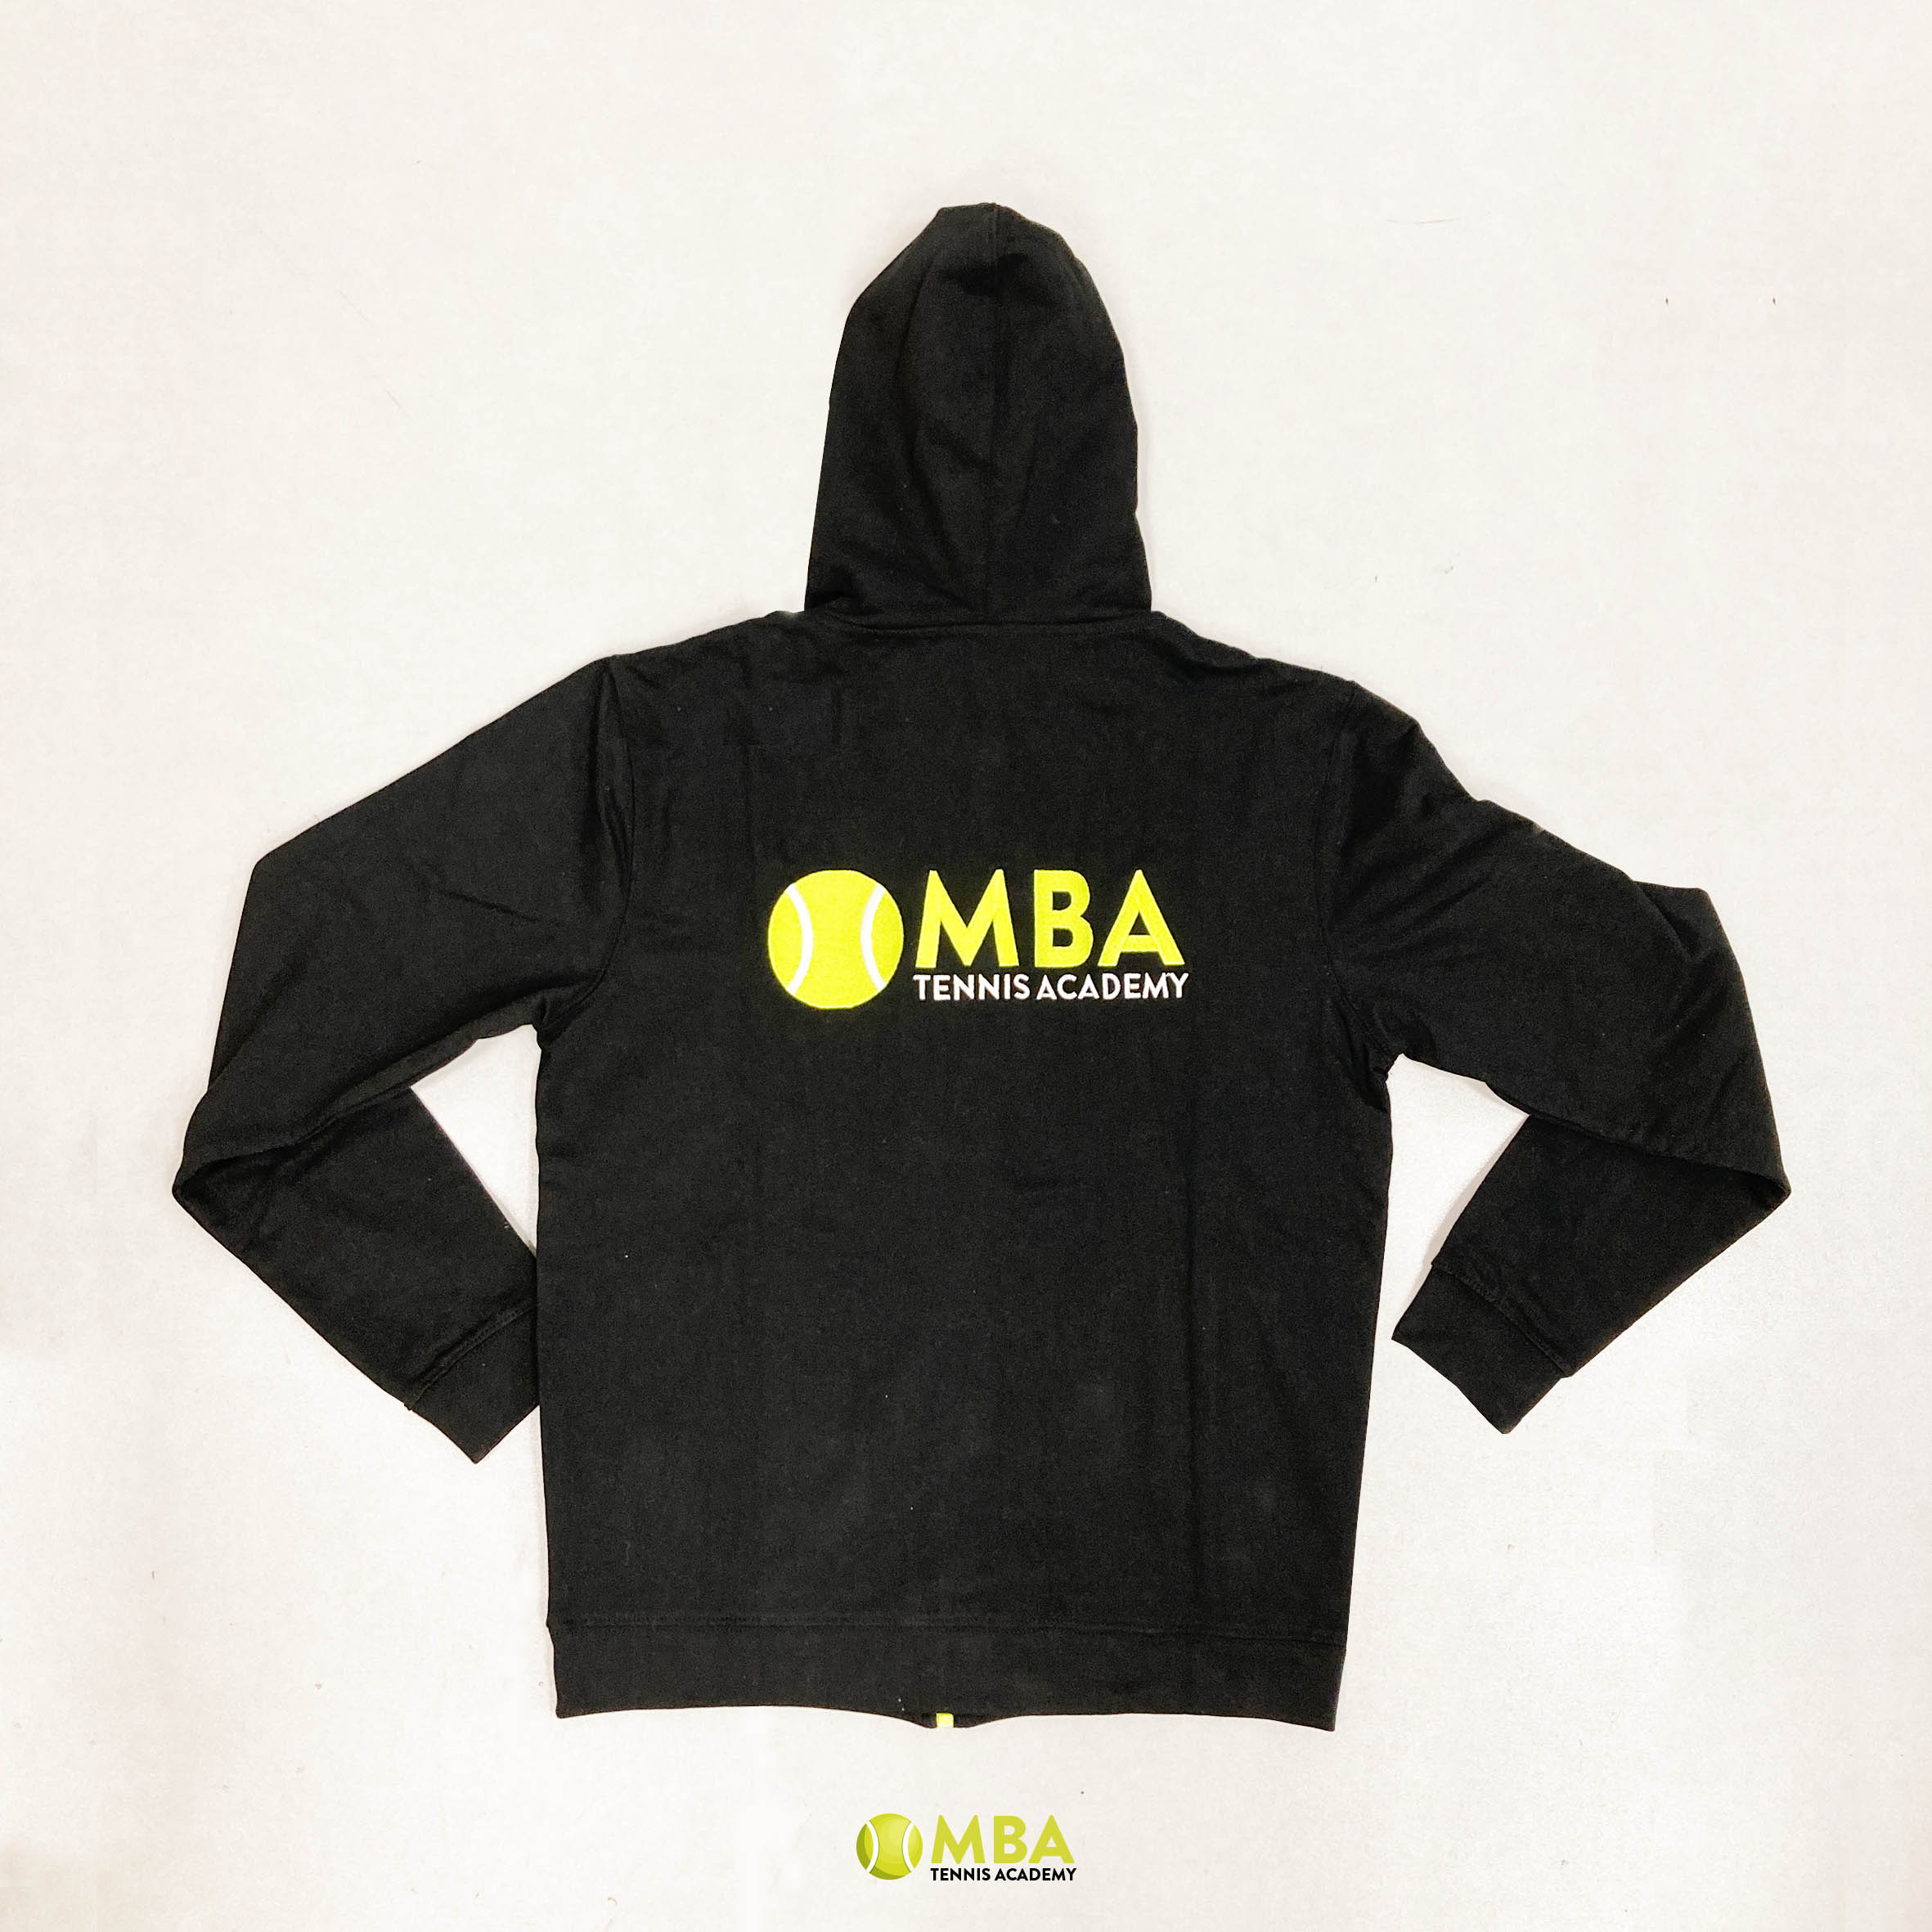 MBA-Tennis-Academy-sudadera-cremallera-3